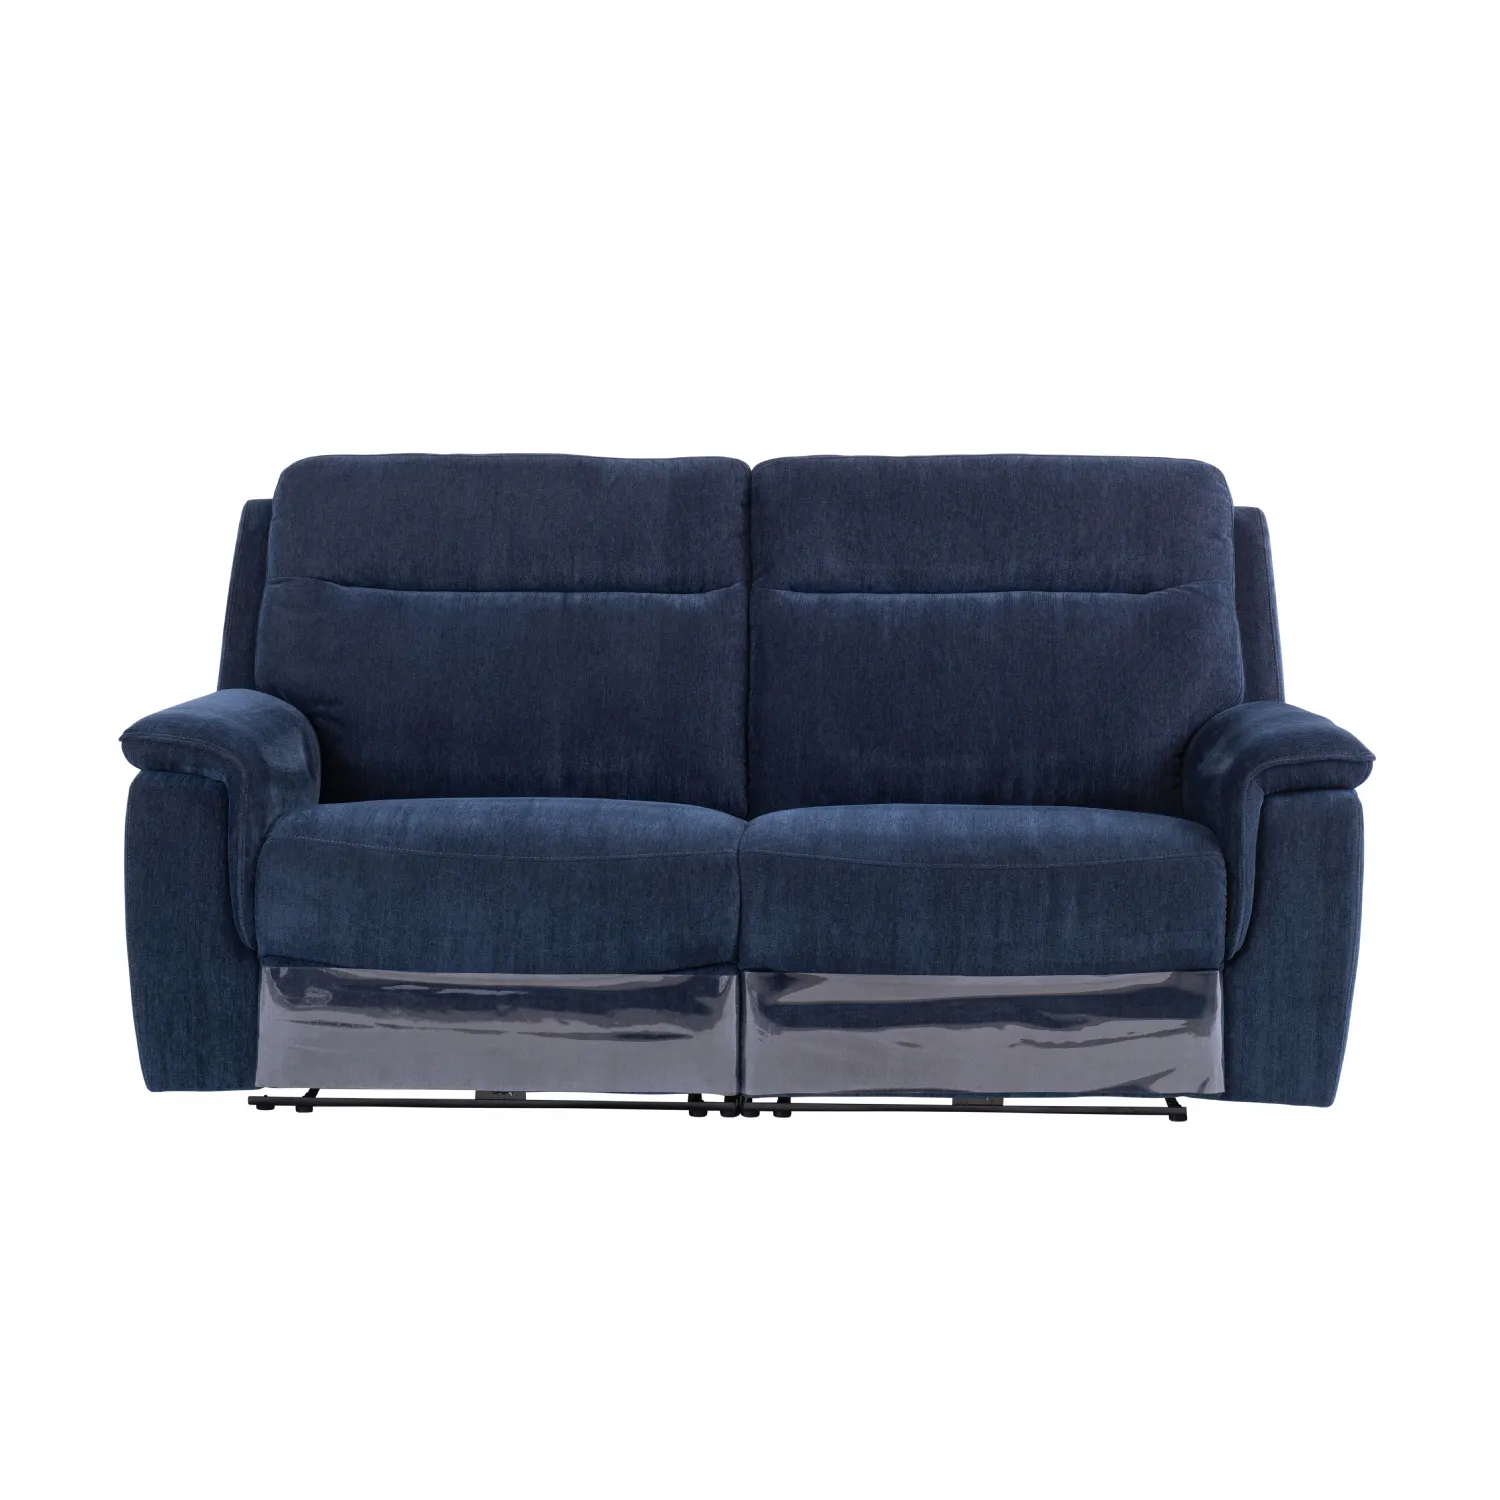 Blue Herringbone Fabric Electric Recliner 3 Seat Sofa